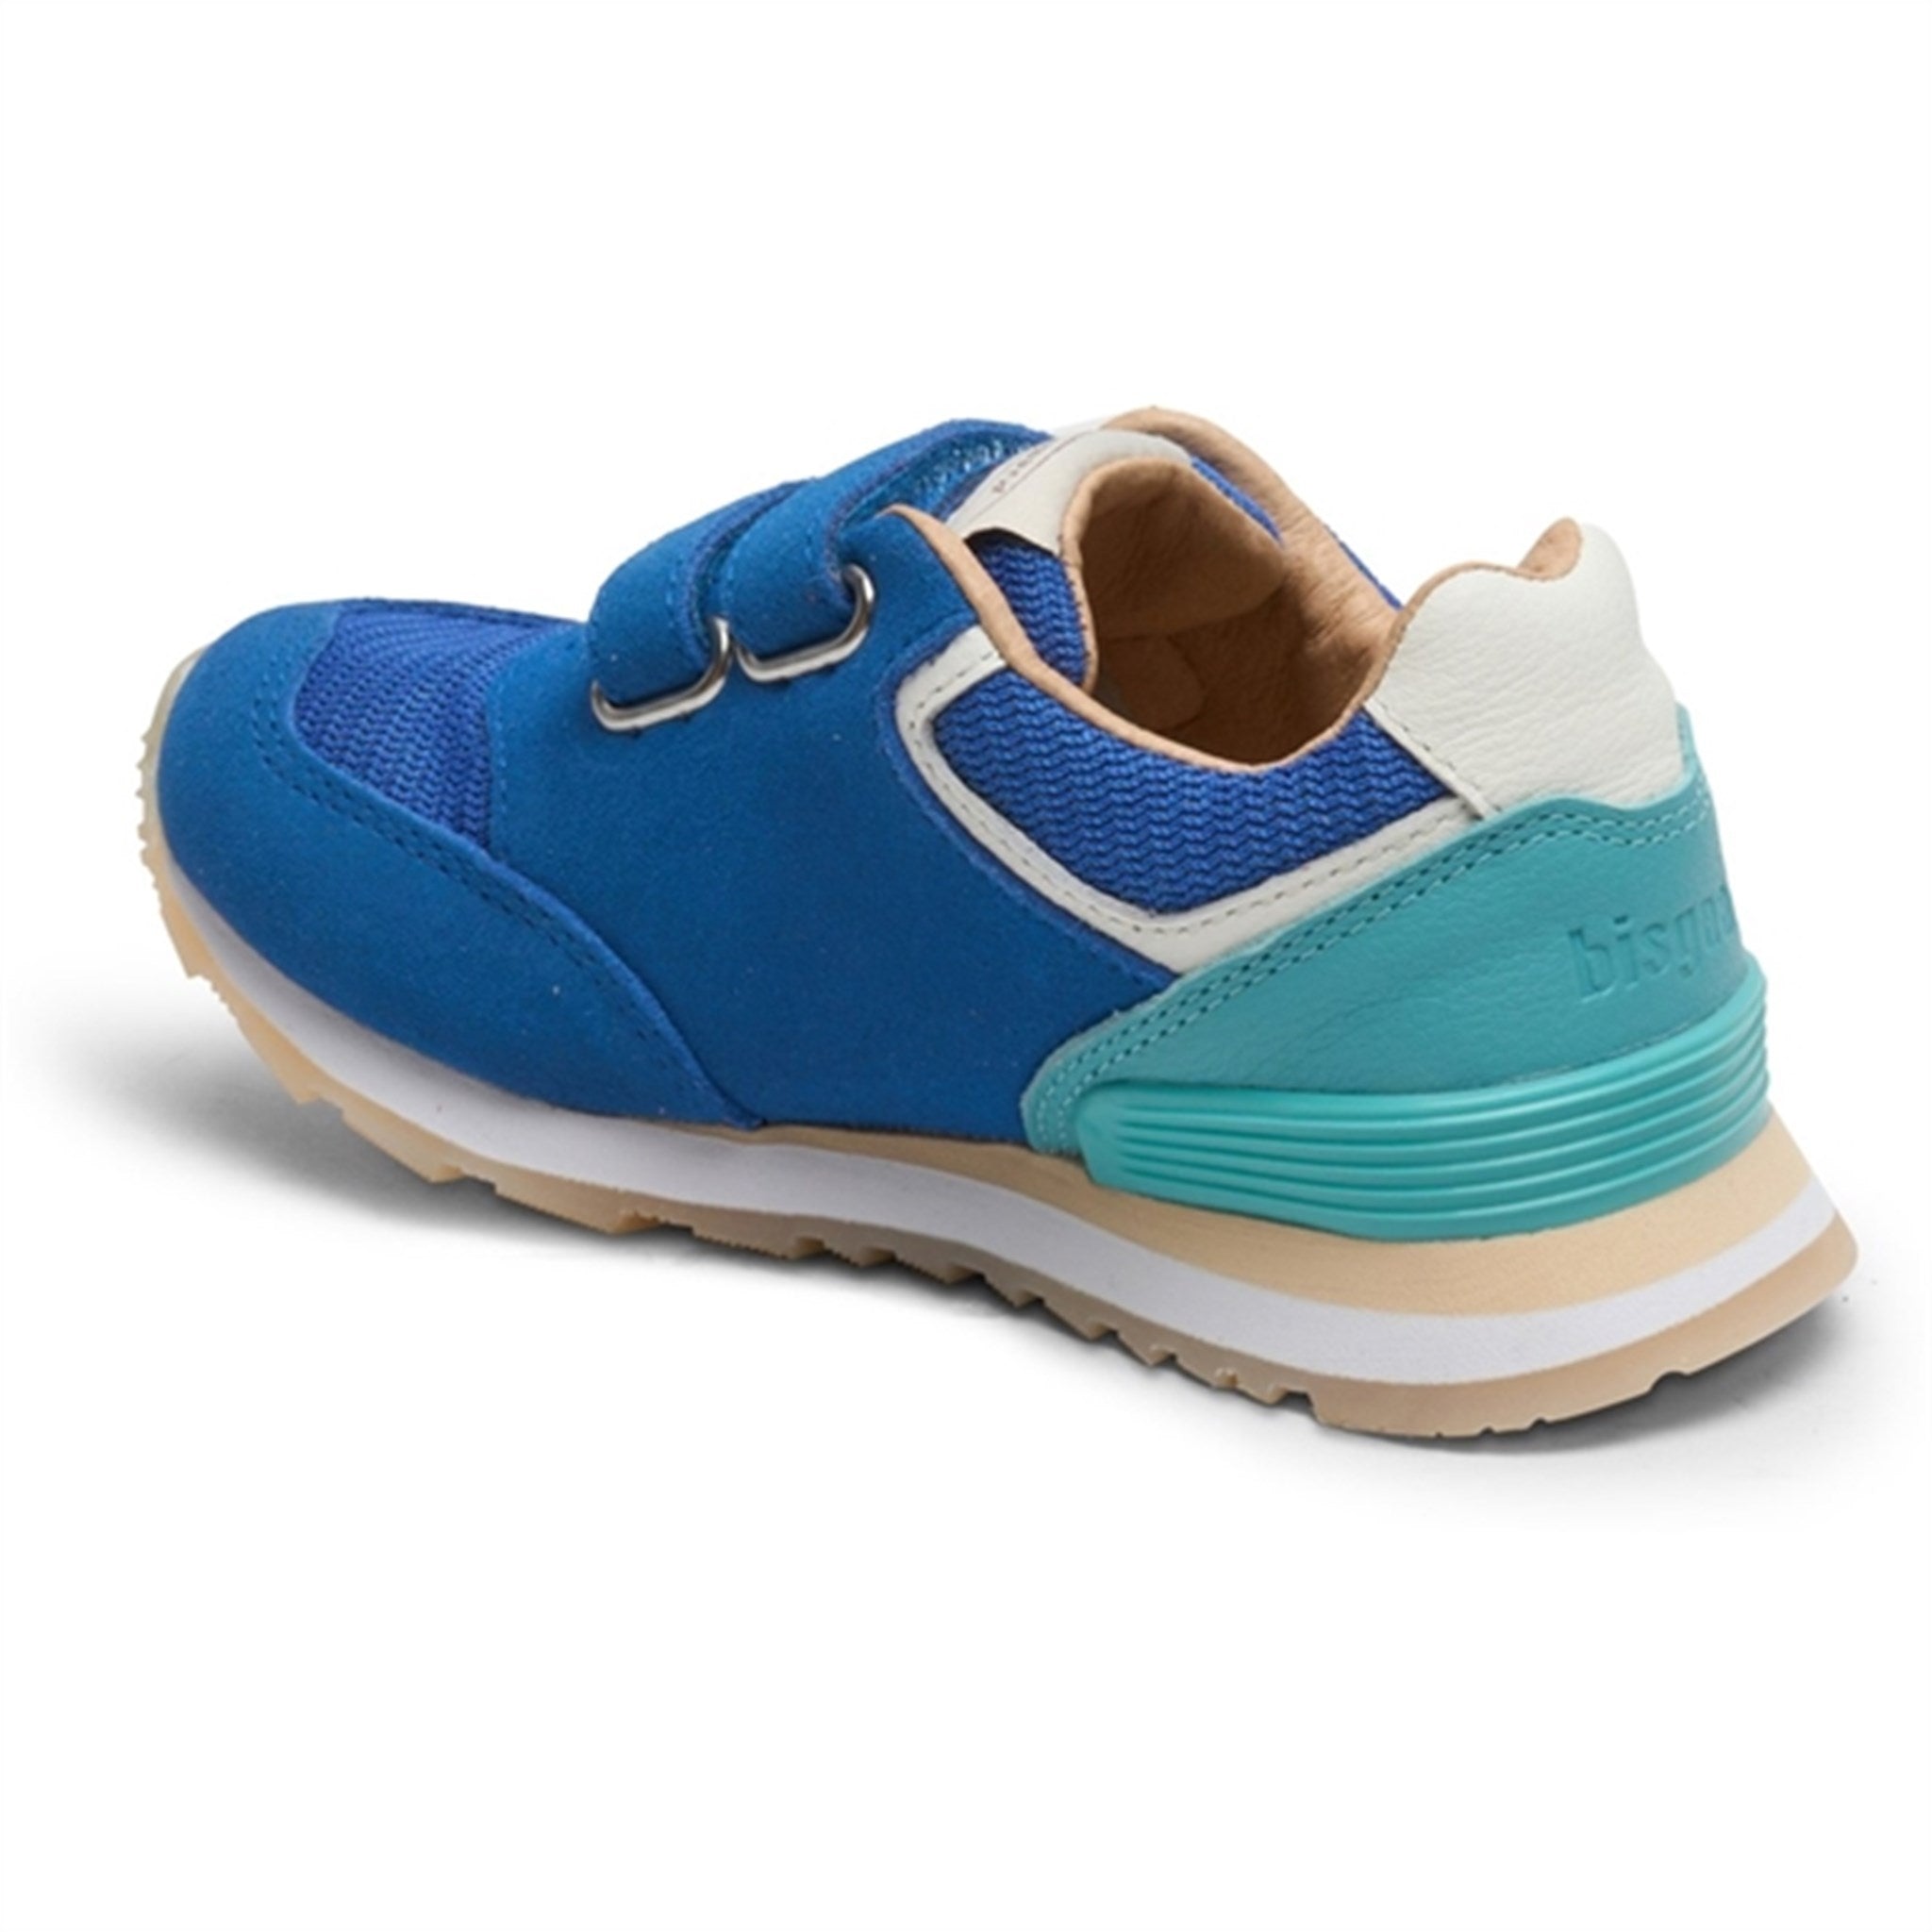 Bisgaard Winston Velcro Shoes Royal Blue 5